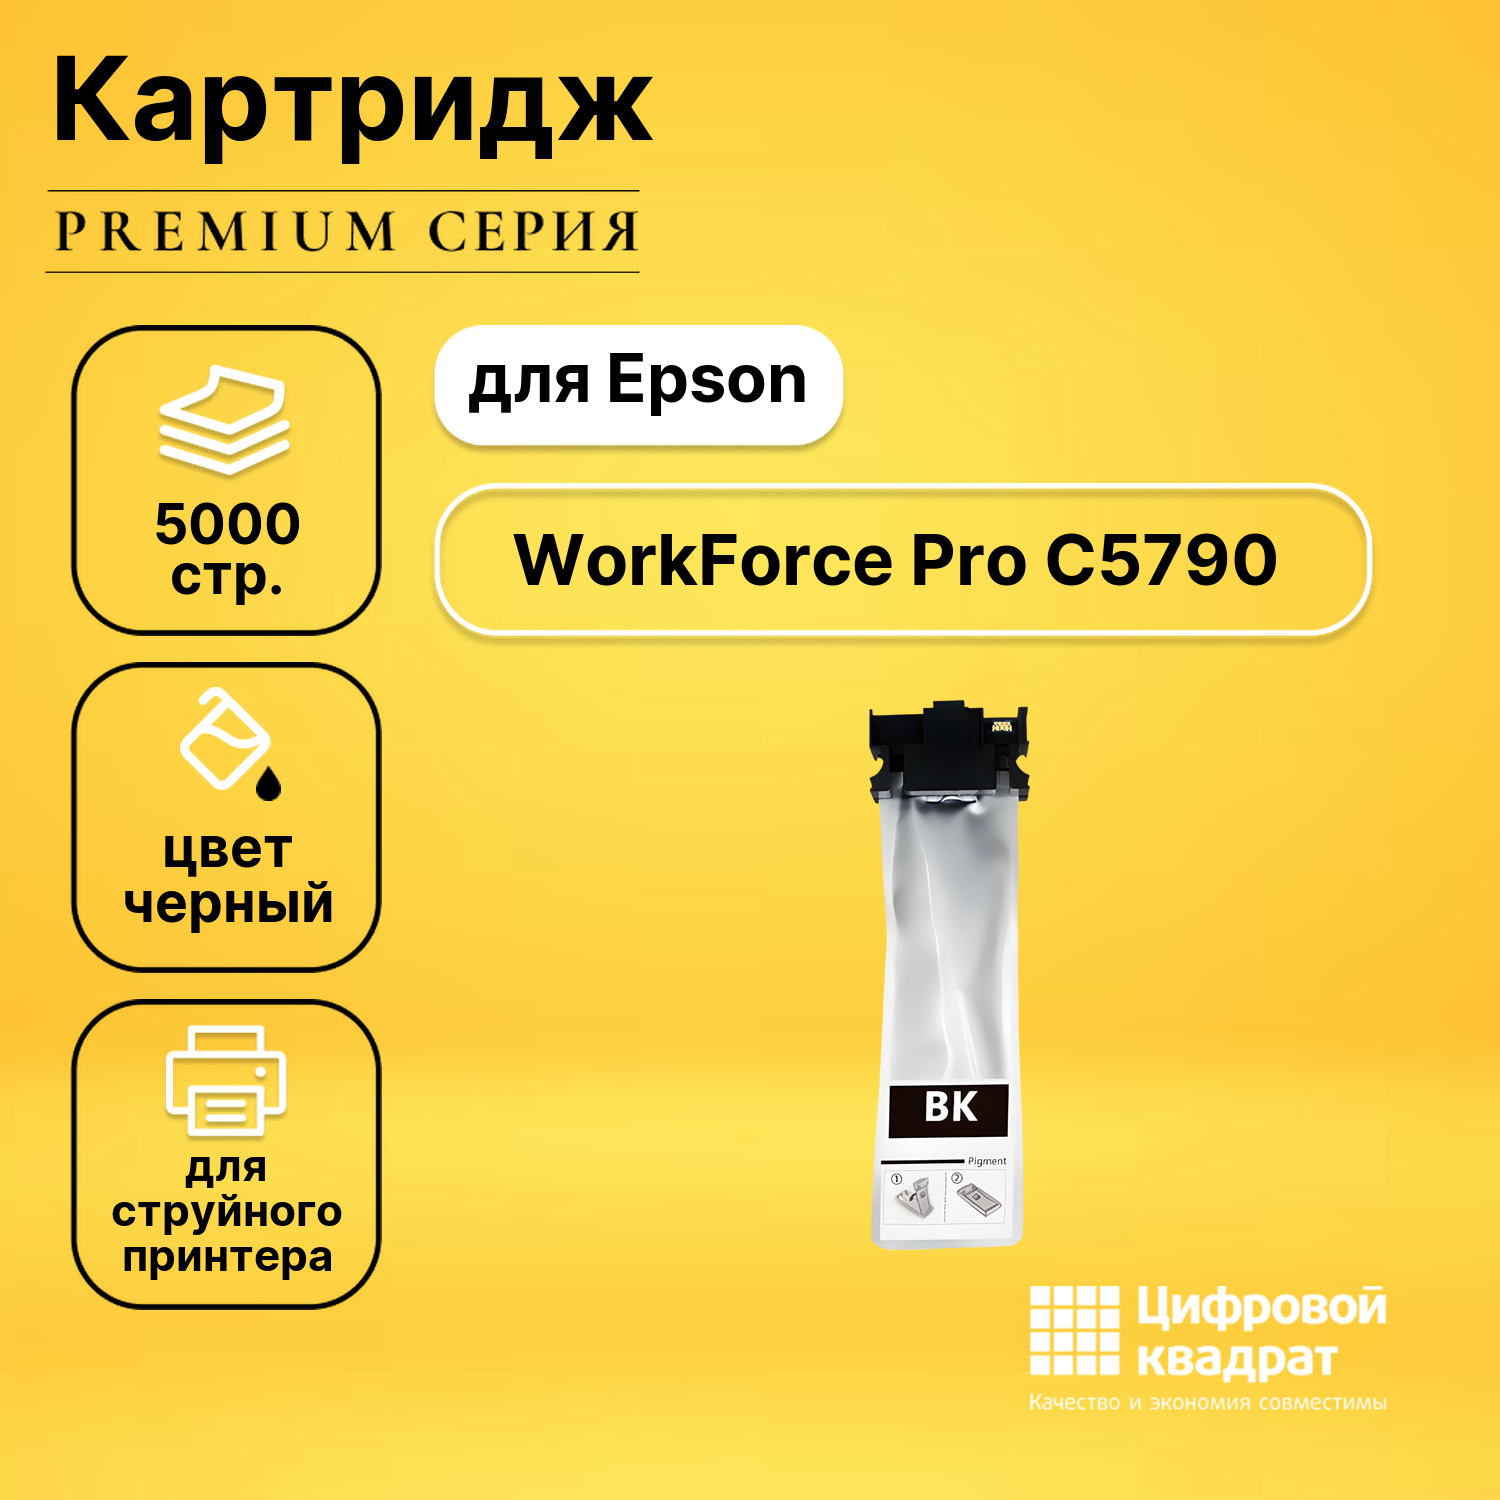 Картридж DS для Epson WorkForce Pro C5790 совместимый